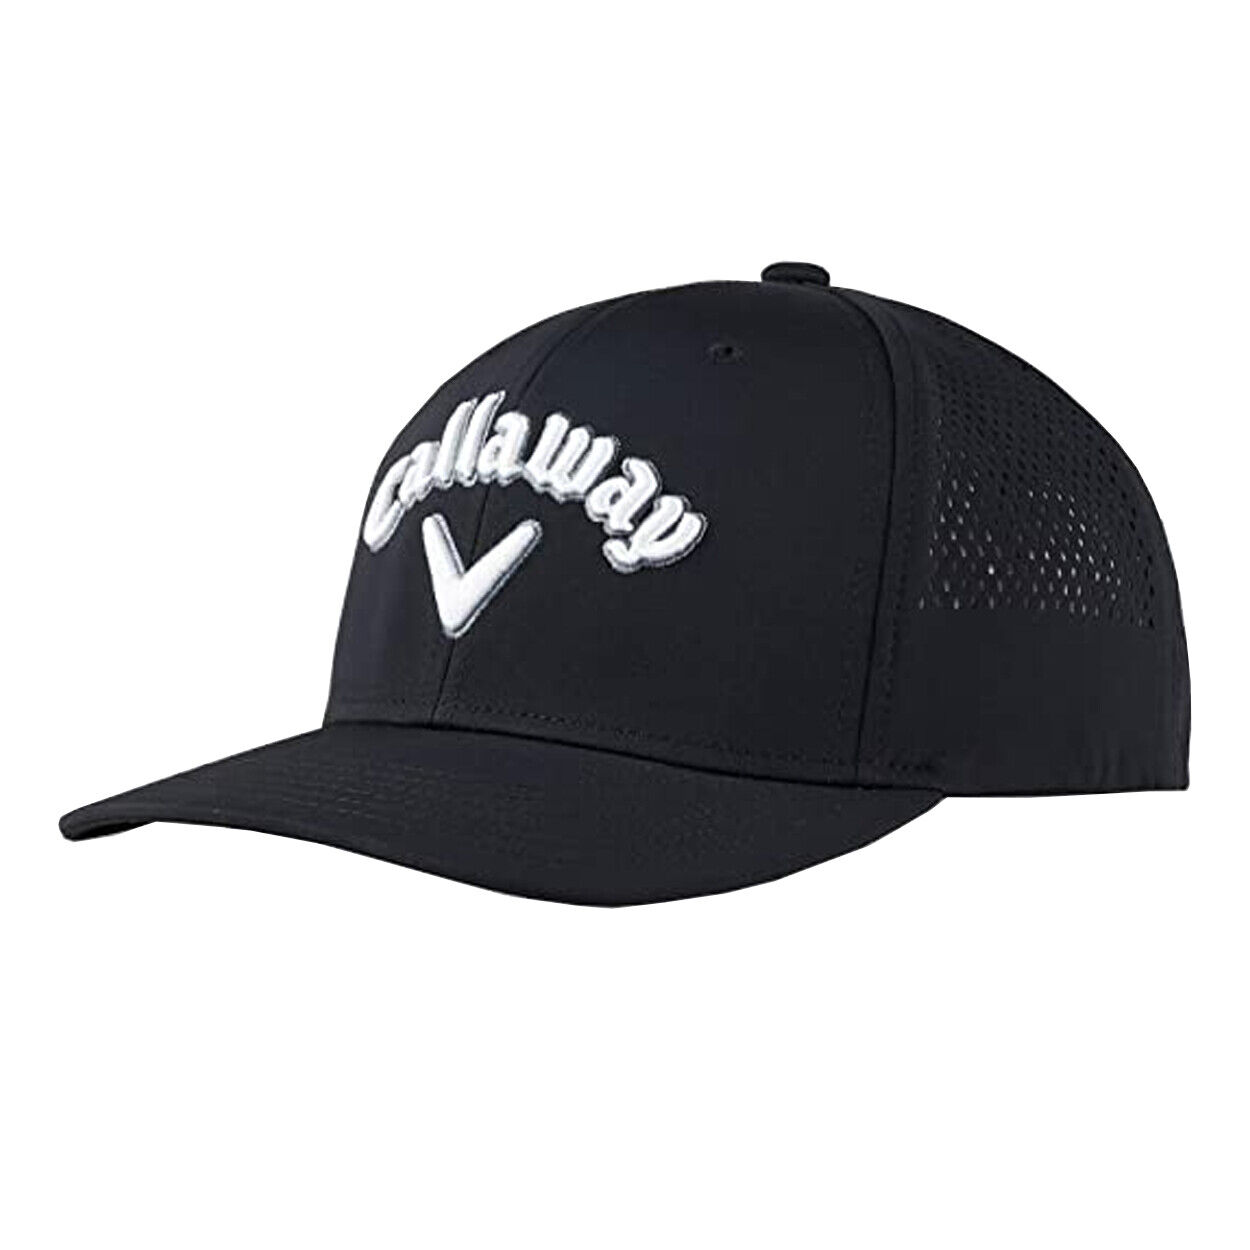 Callaway Golf Men's Riviera Fitted Hat, Small/Medium Black/White